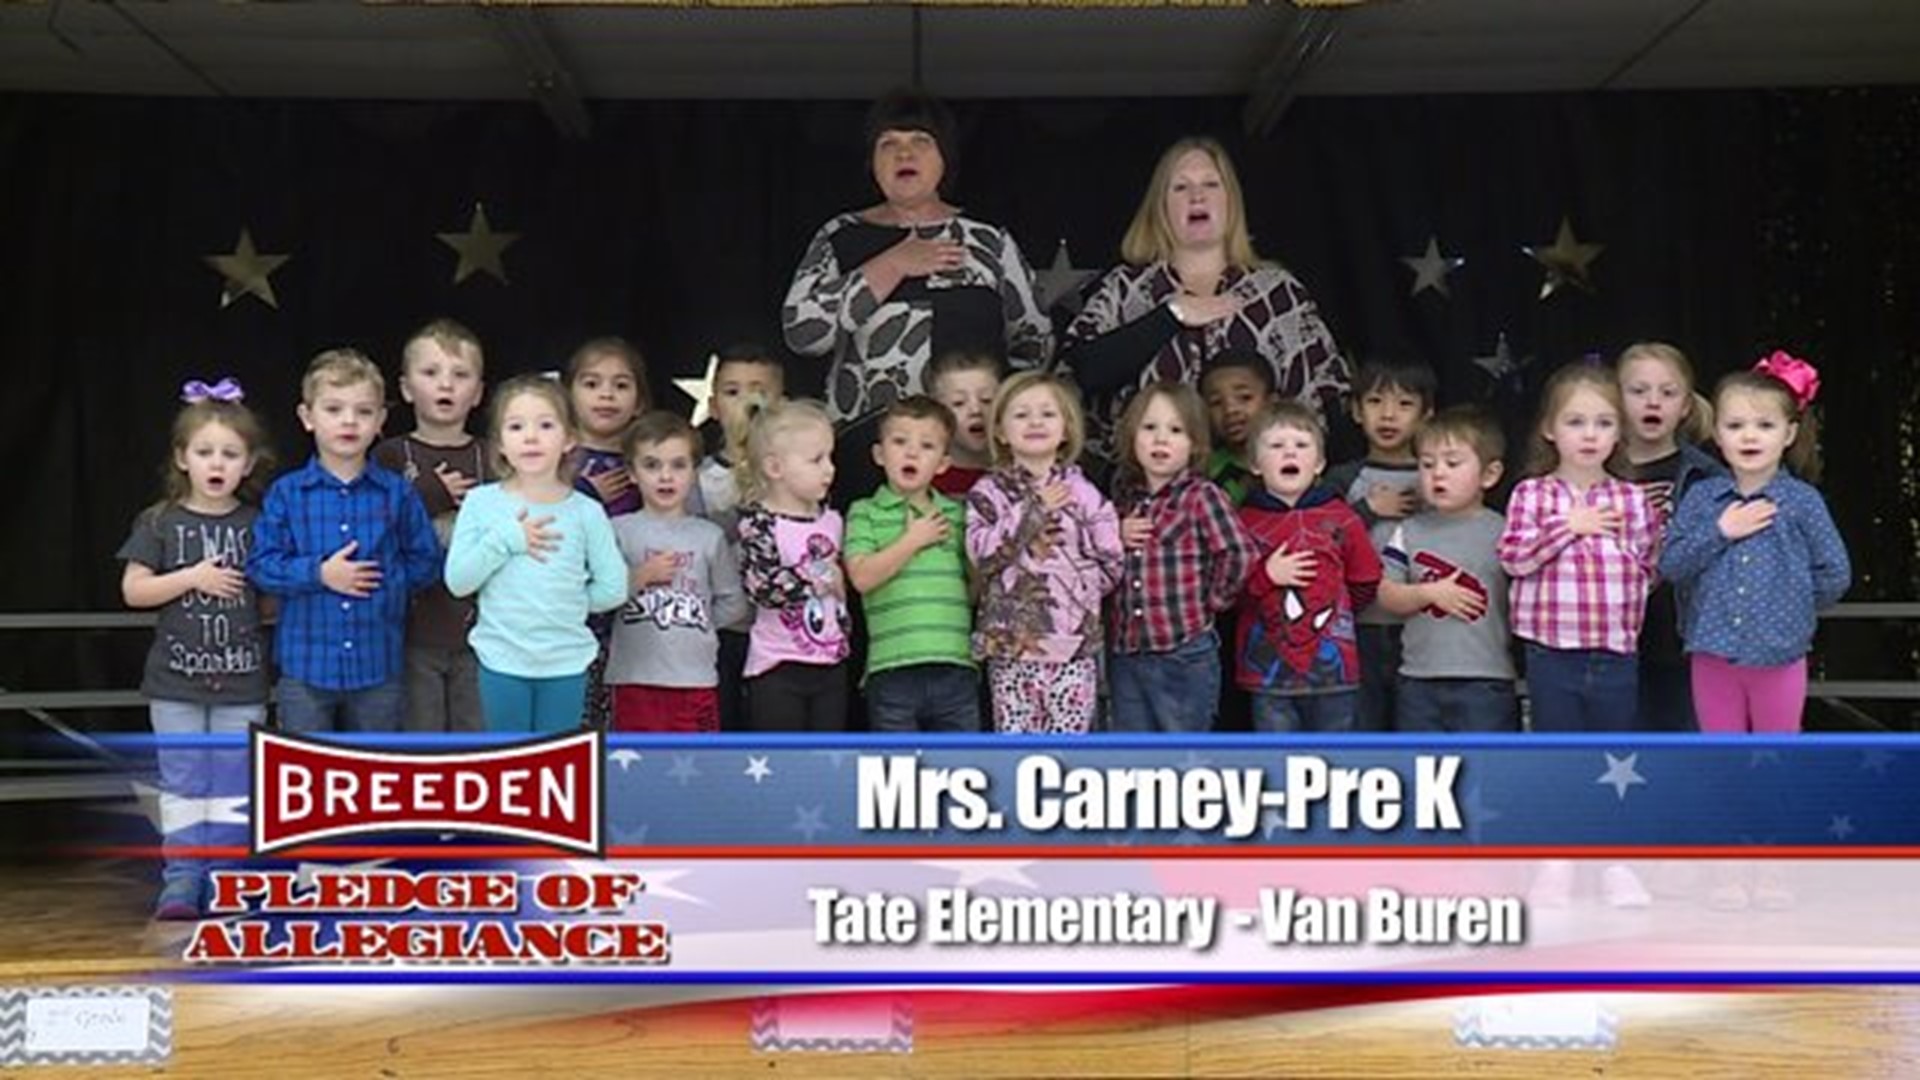 Tate Elementary - Van Buren, Mrs. Carney - Pre-K